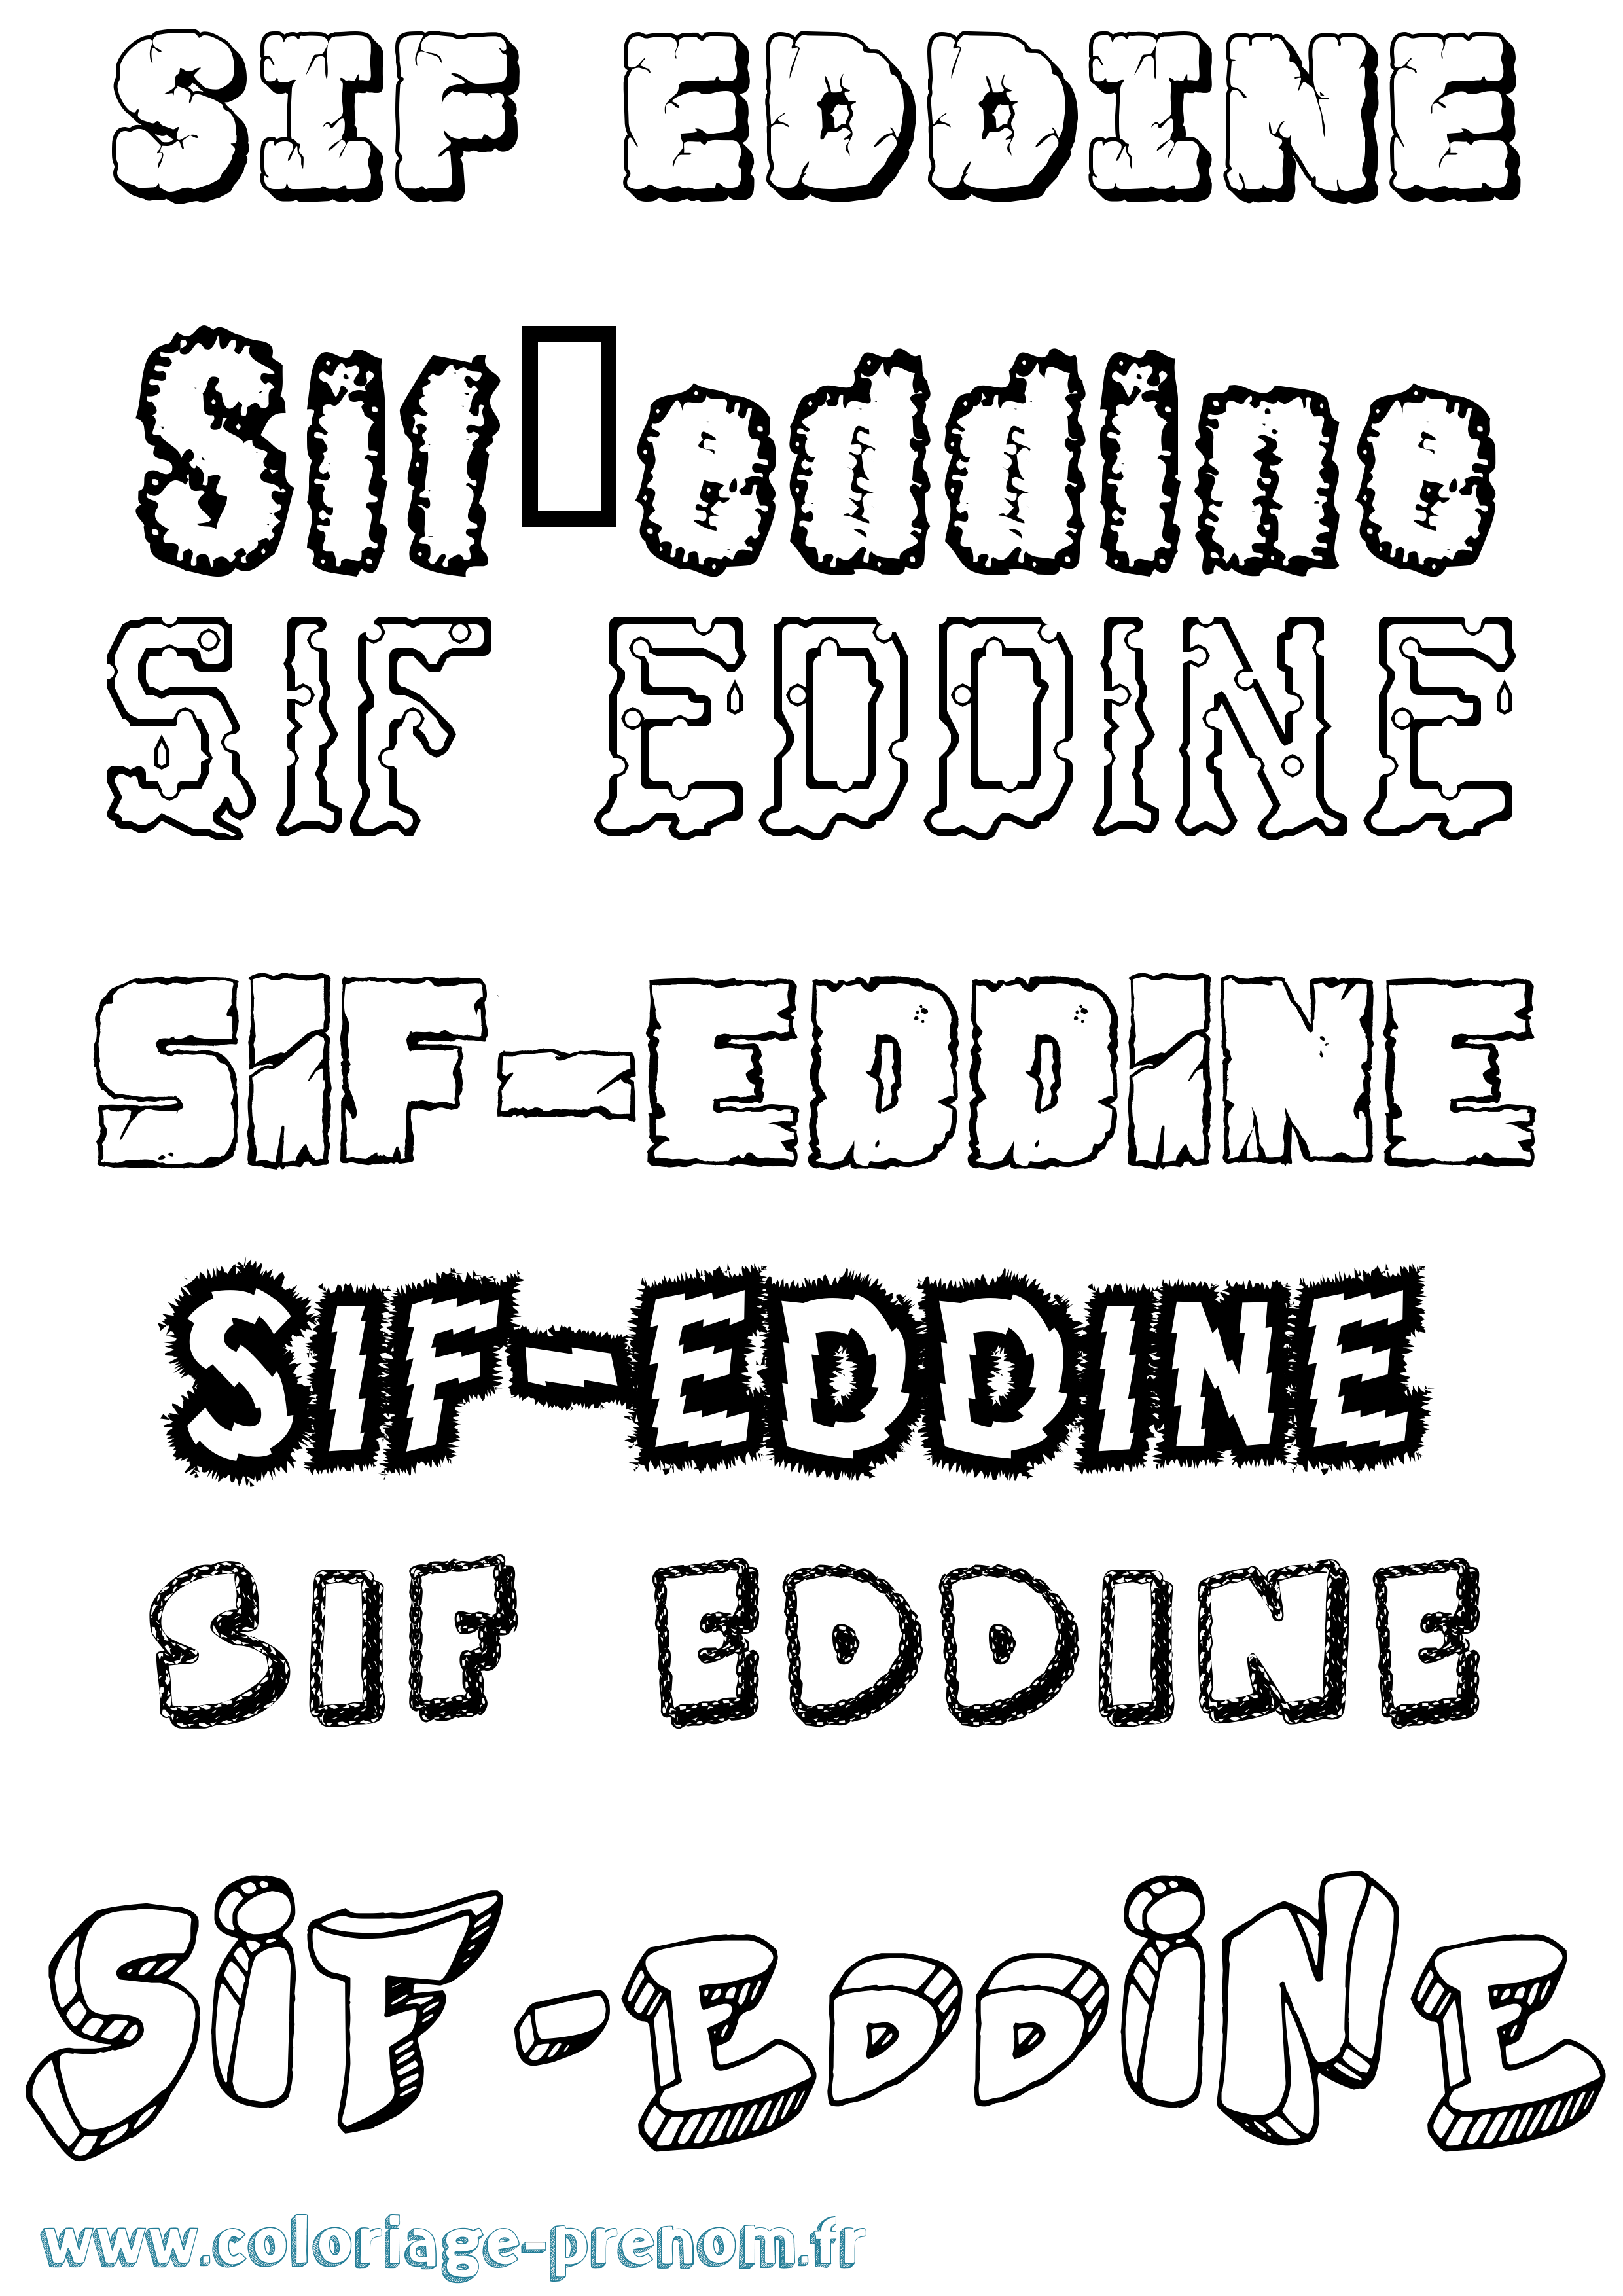 Coloriage prénom Sif-Eddine Destructuré